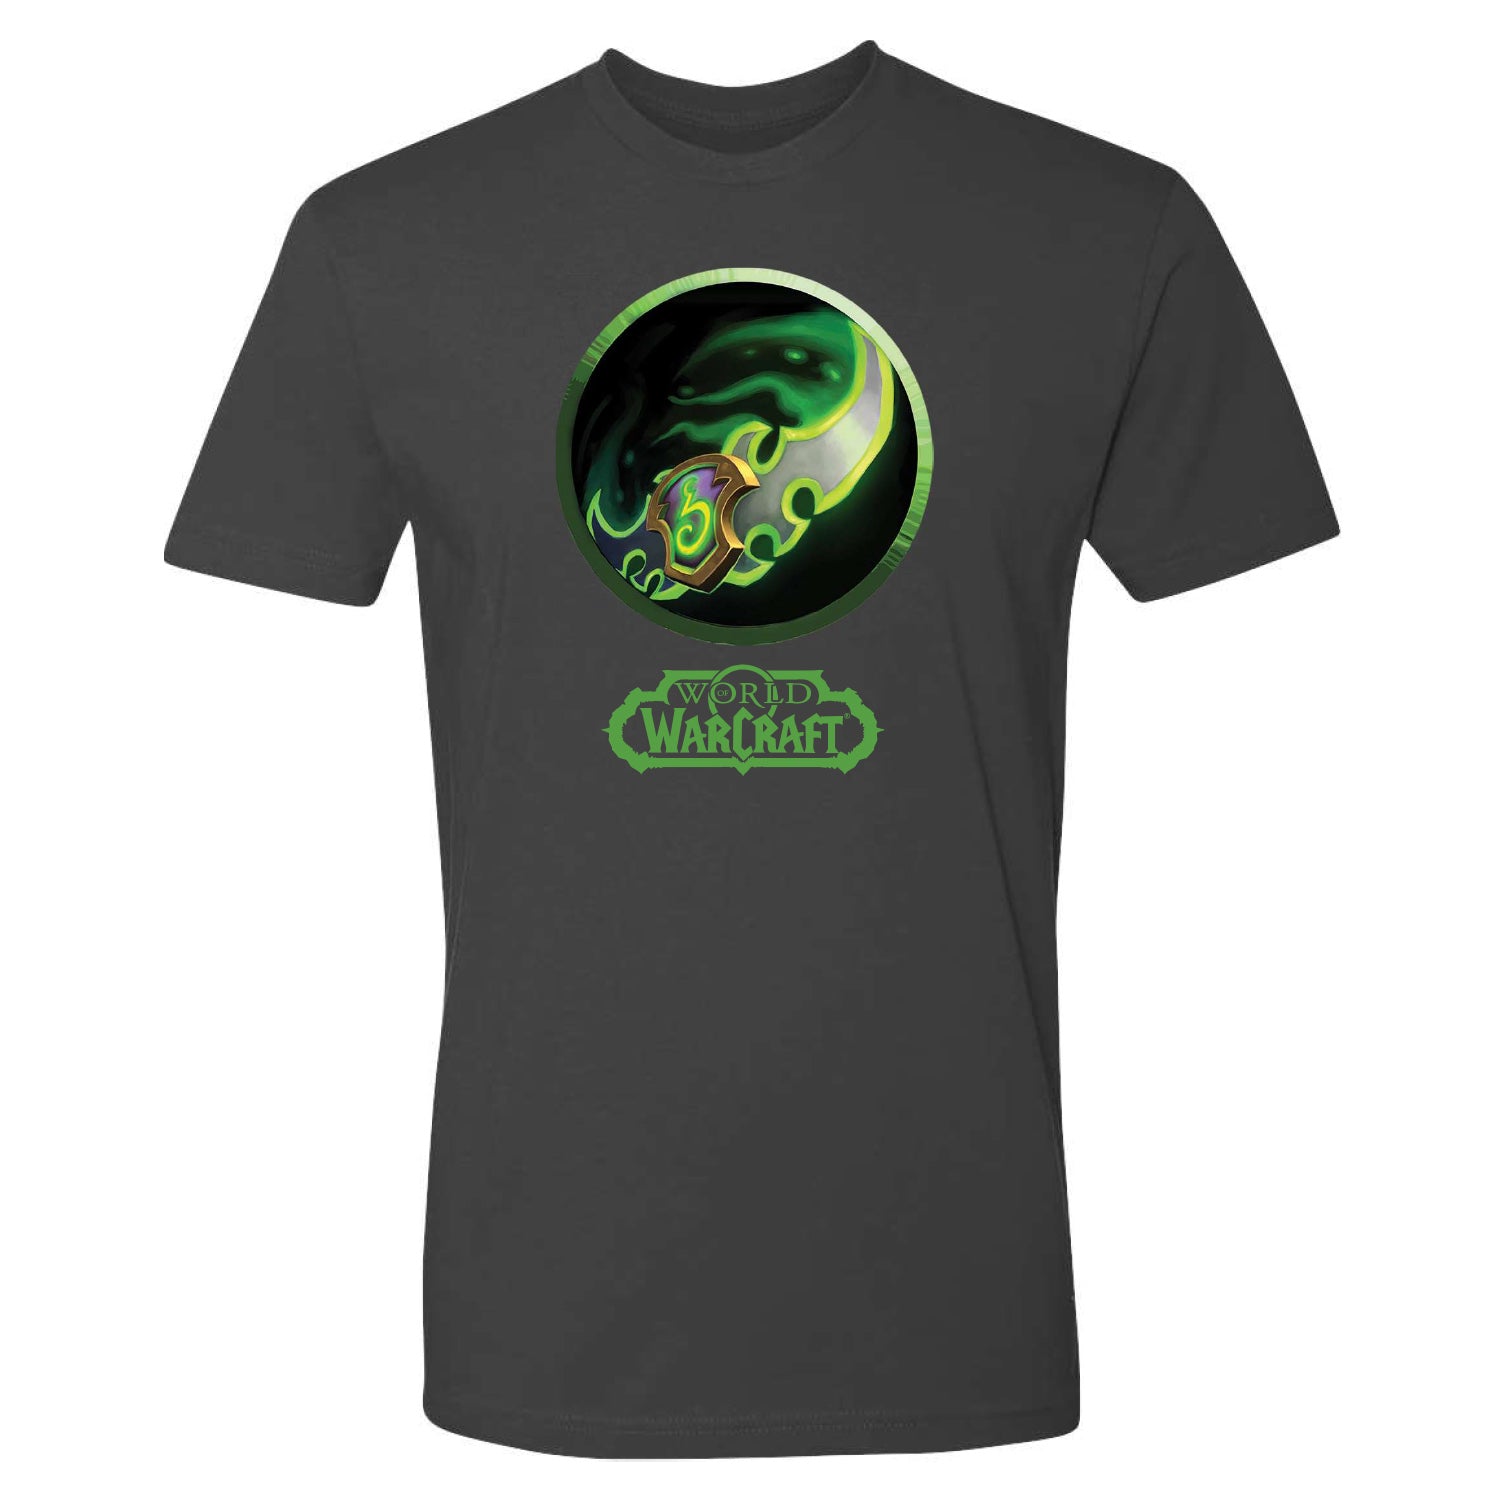 World of Warcraft Demon Hunter T-Shirt - Front View Grey Version